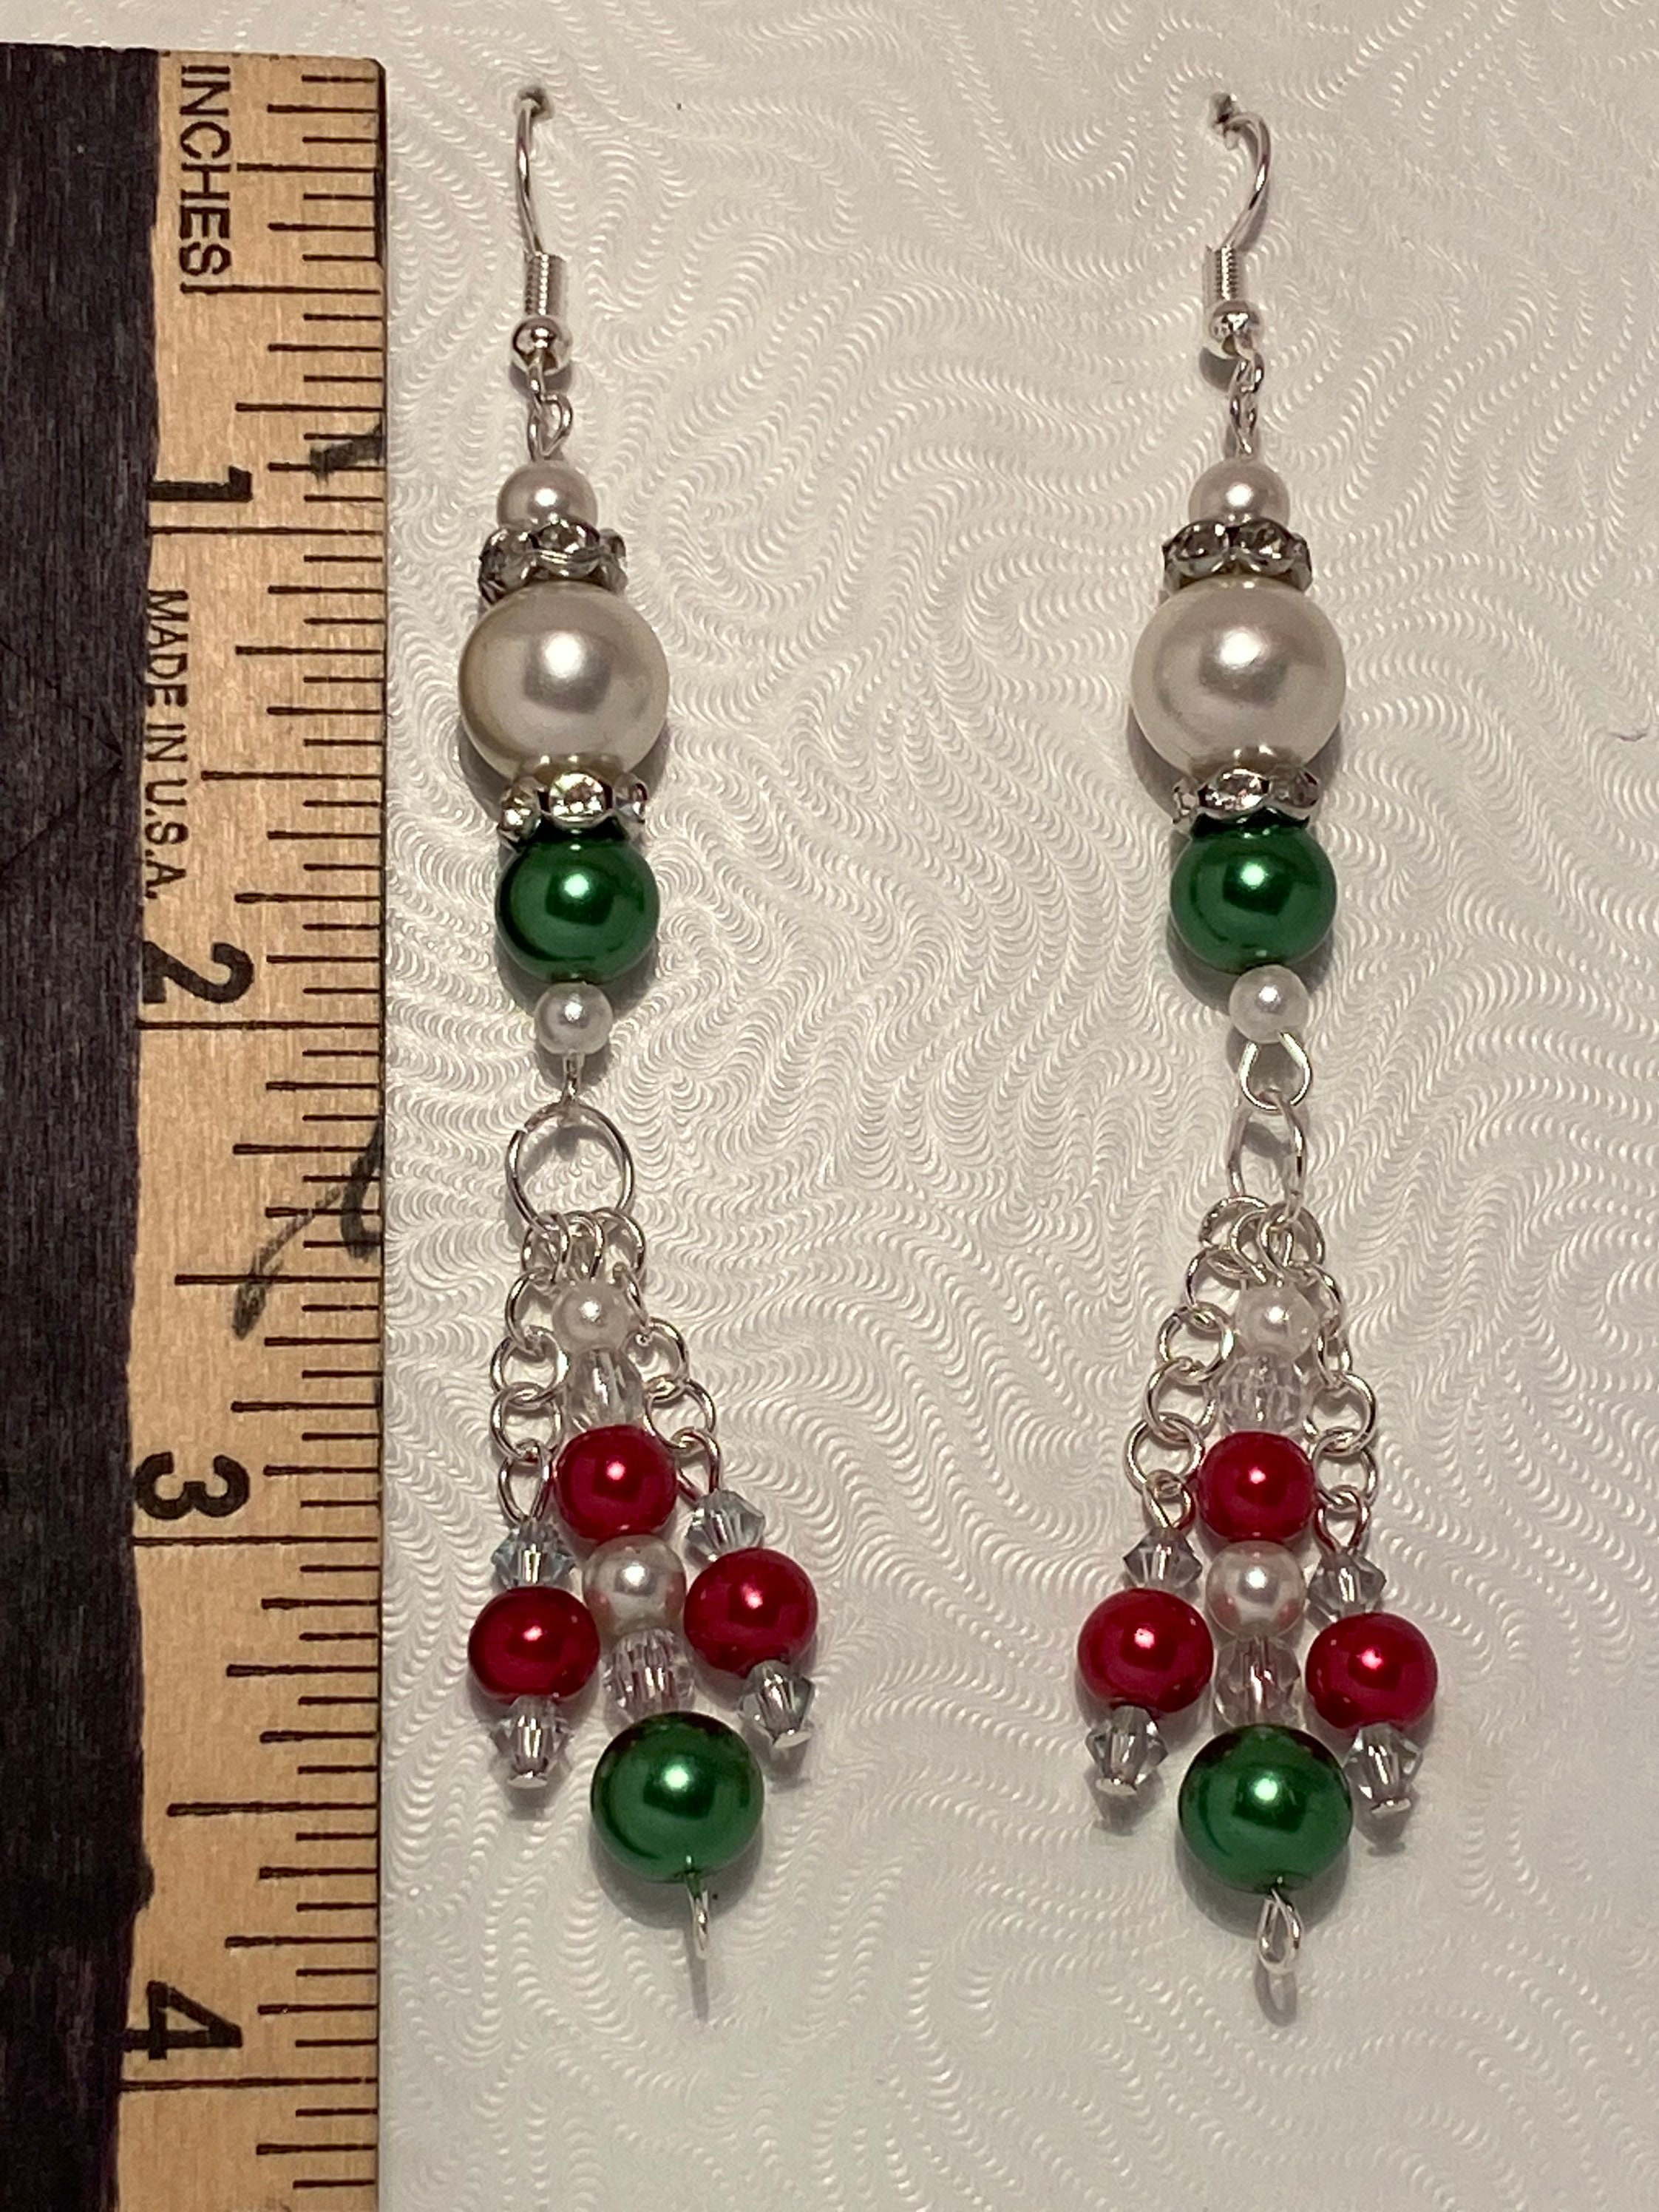 Handmade Earrings Red Green White Pearl Beads Crystal | Etsy